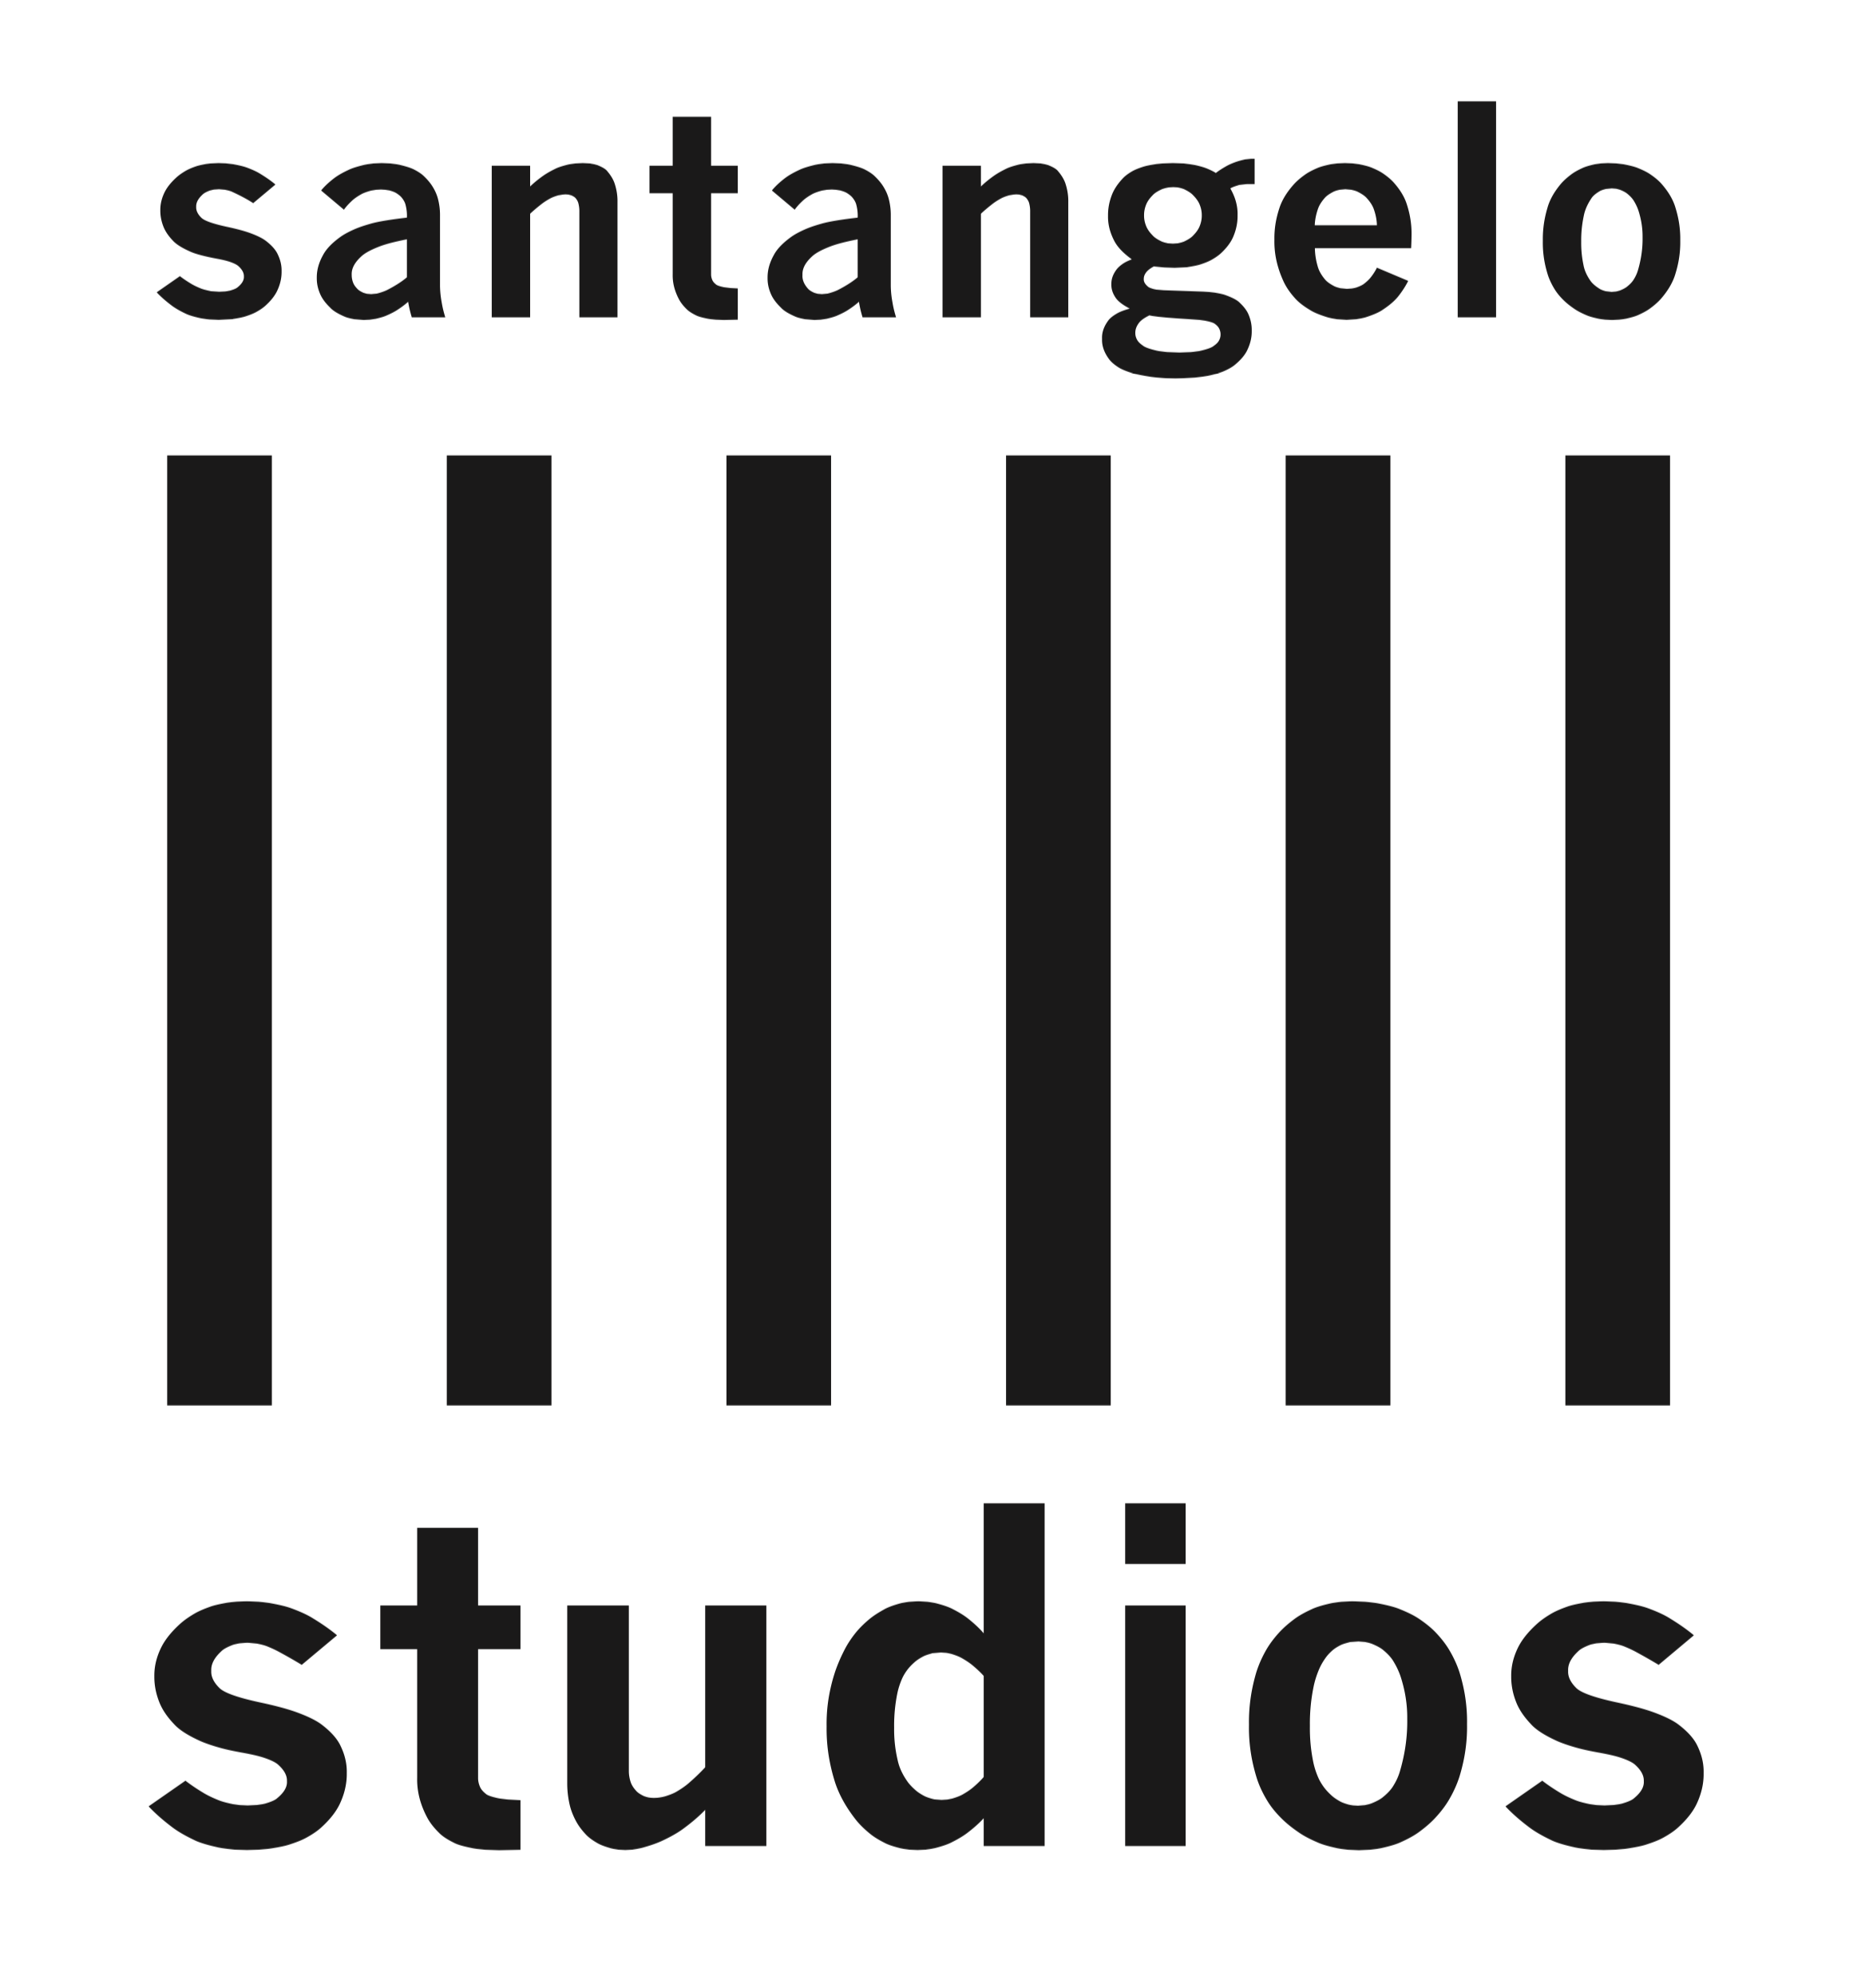 Santangelo Studios